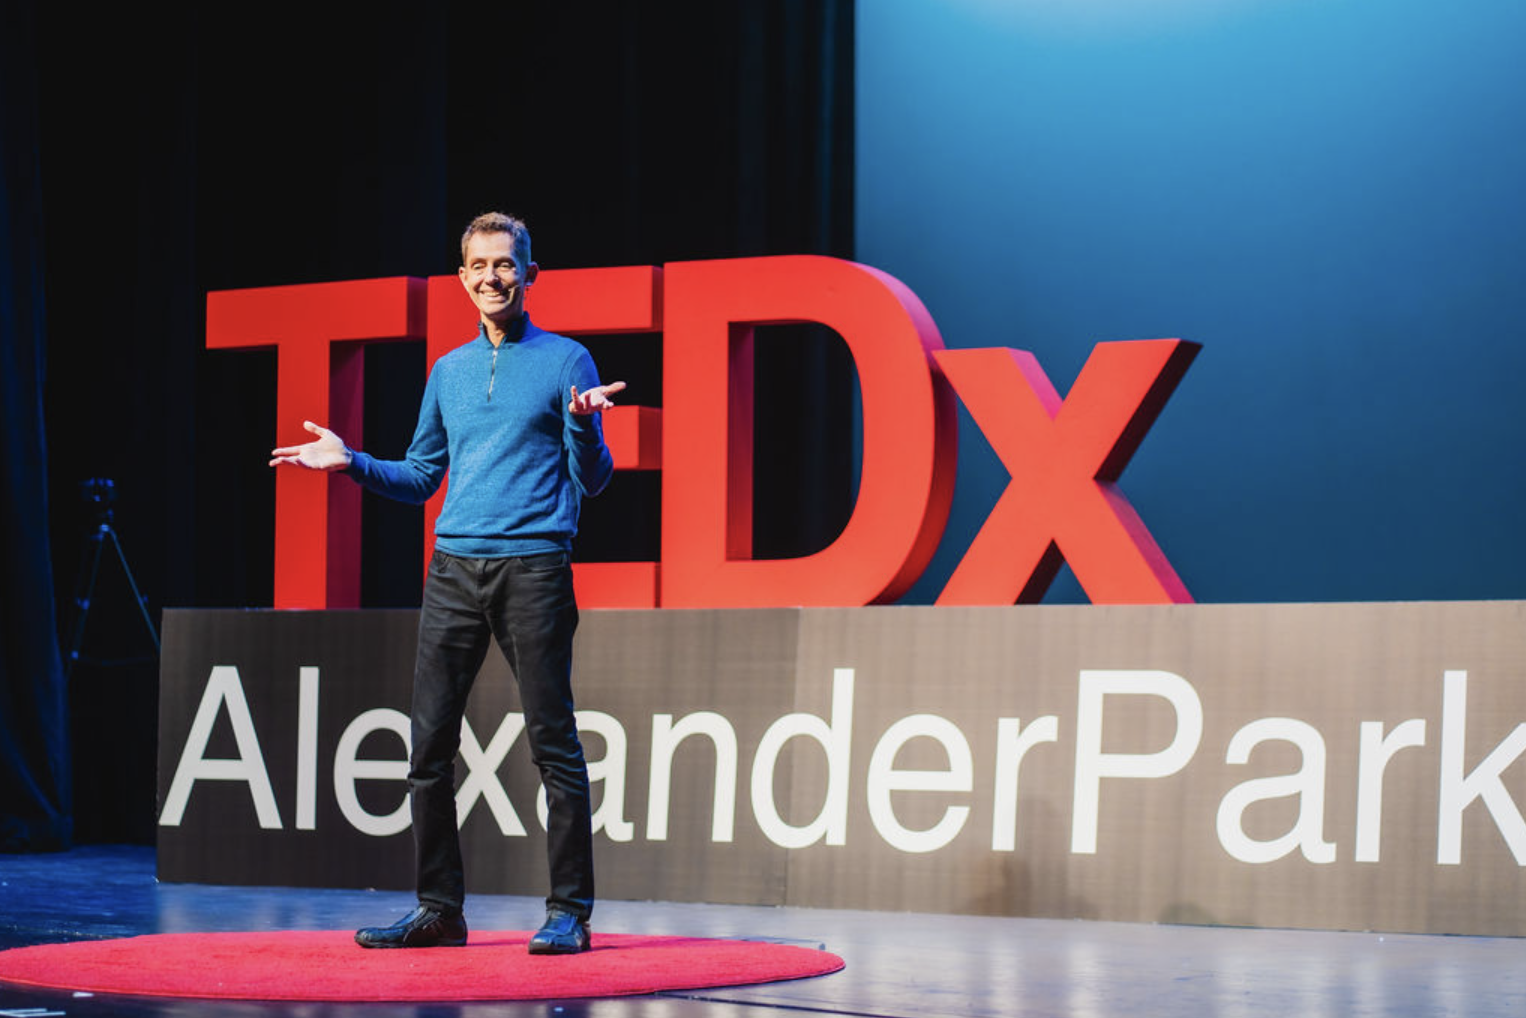 Ocean Robbins giving his TED talk at TEDx Alexander Park